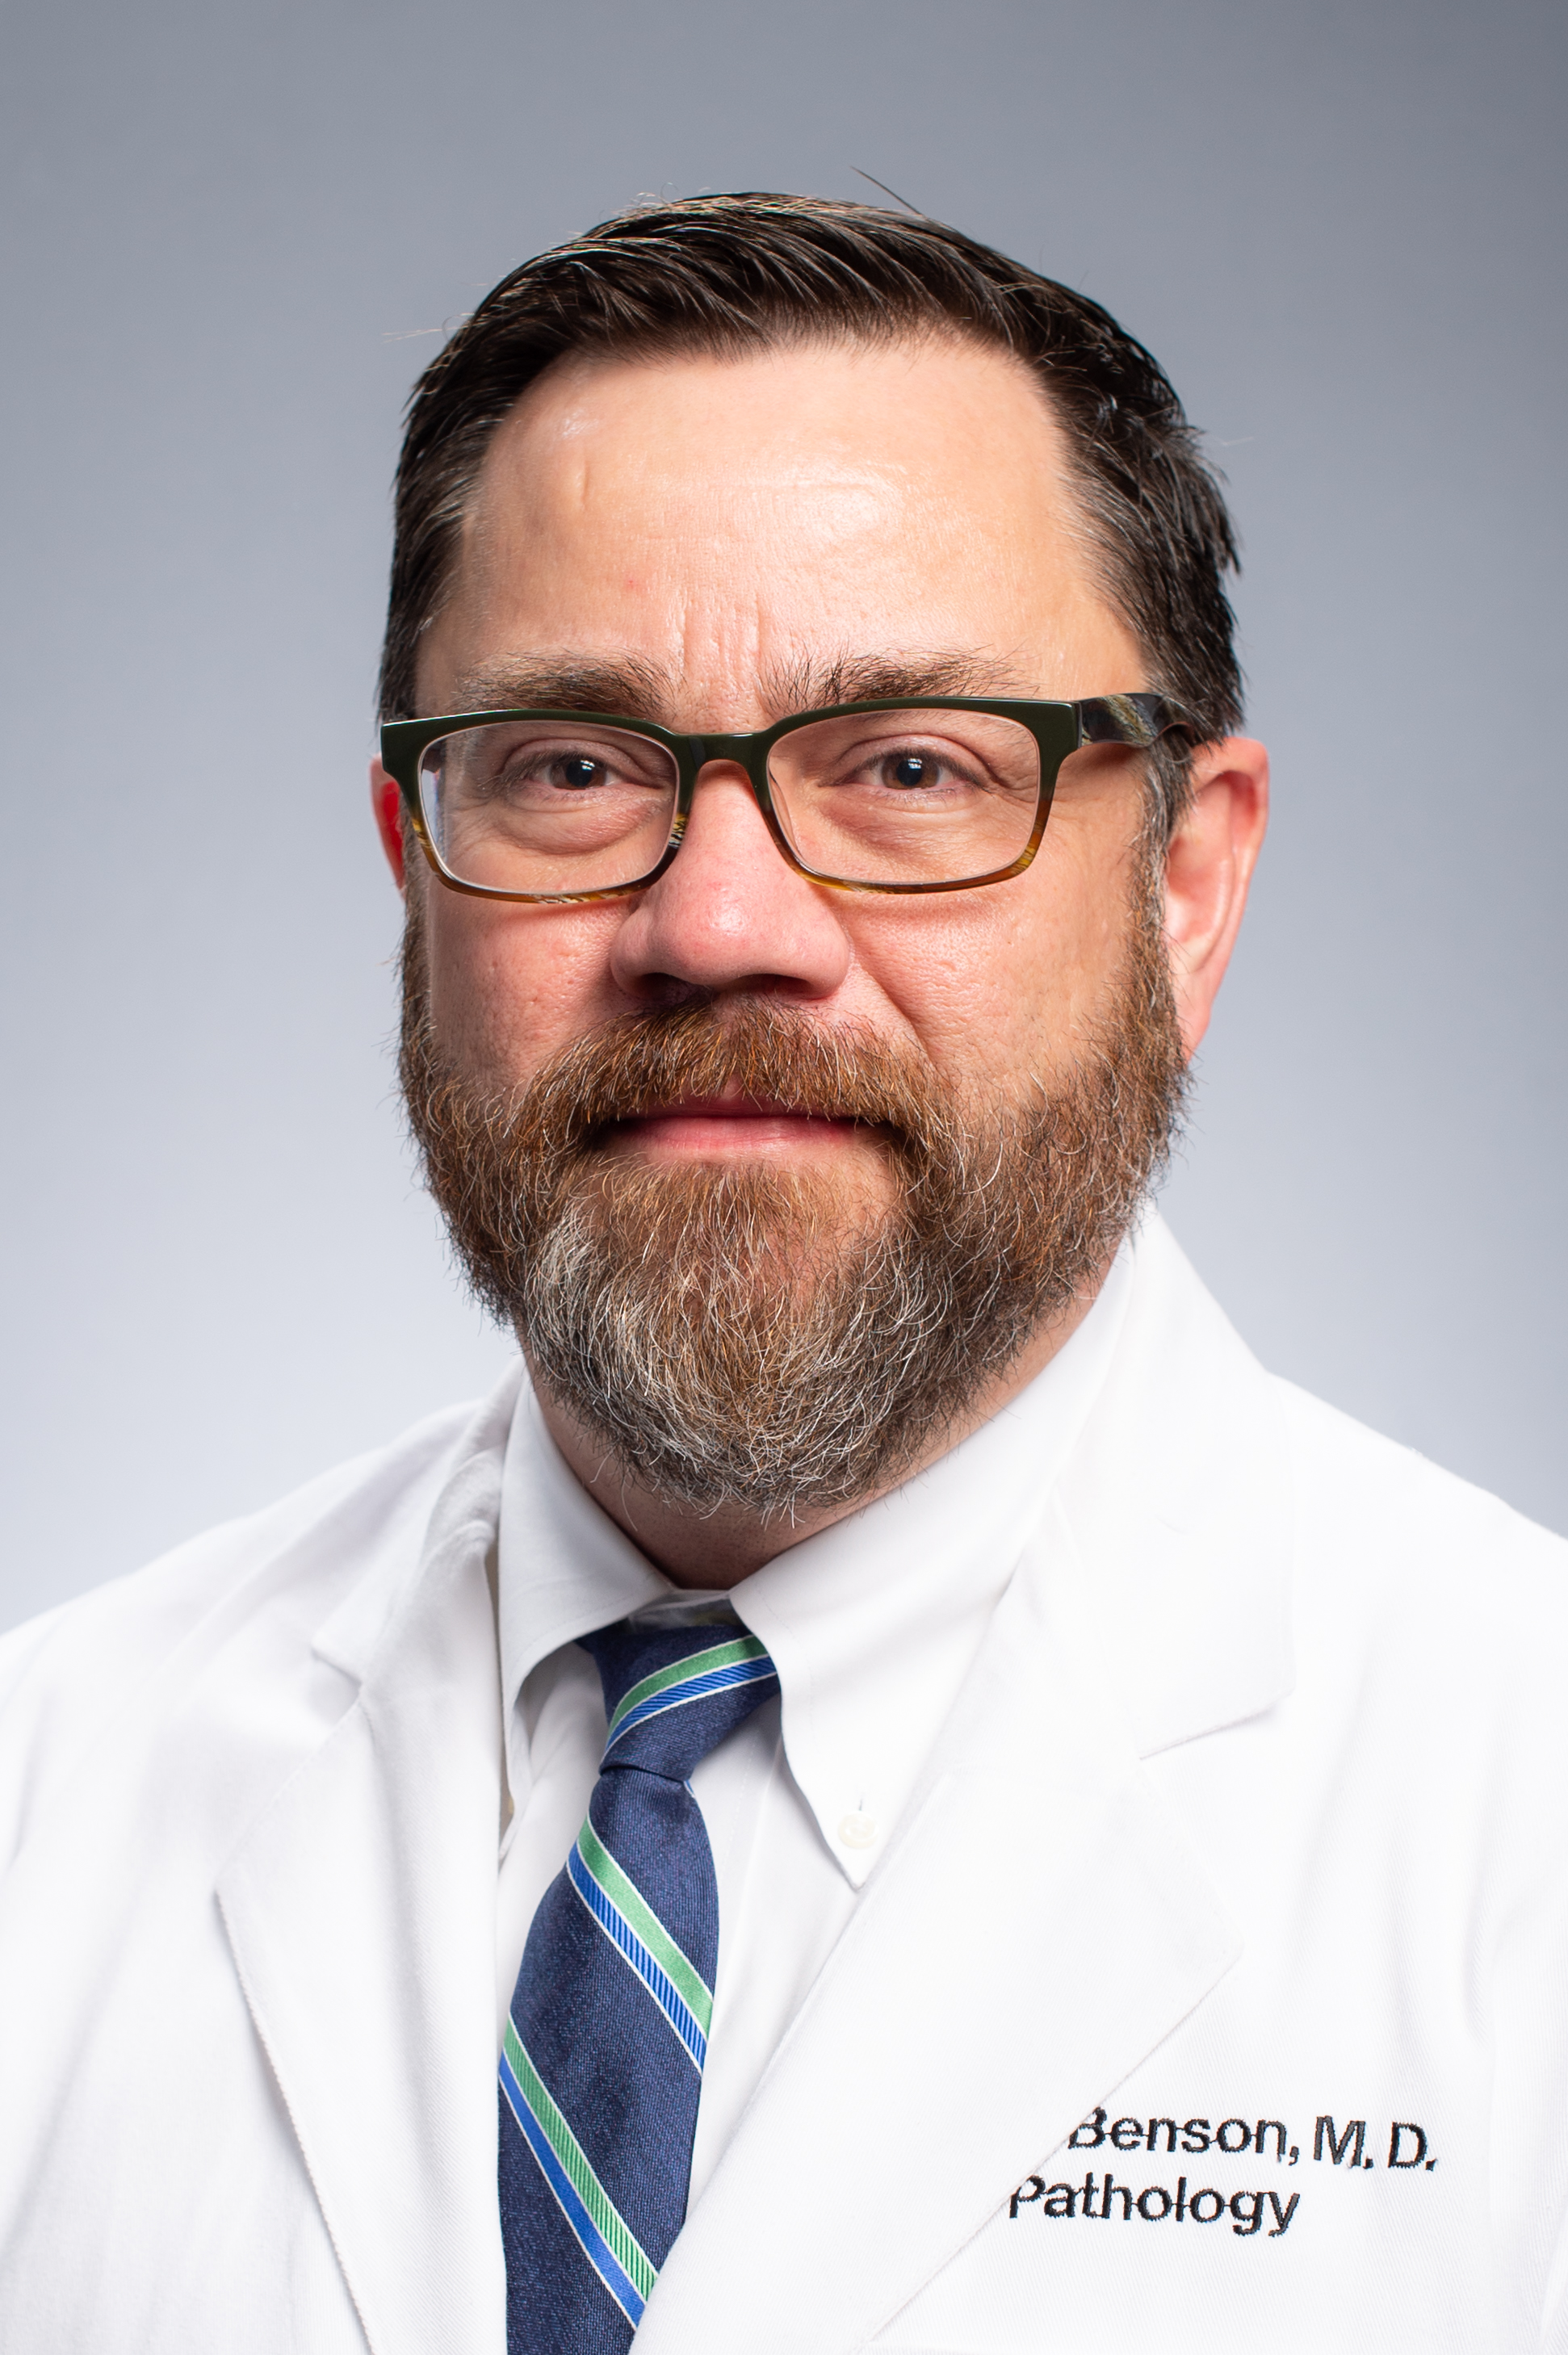 Headshot of Dr. Paul Benson, MD (Associate Professor, Anatomic Pathology) in white medical coat, 2020.